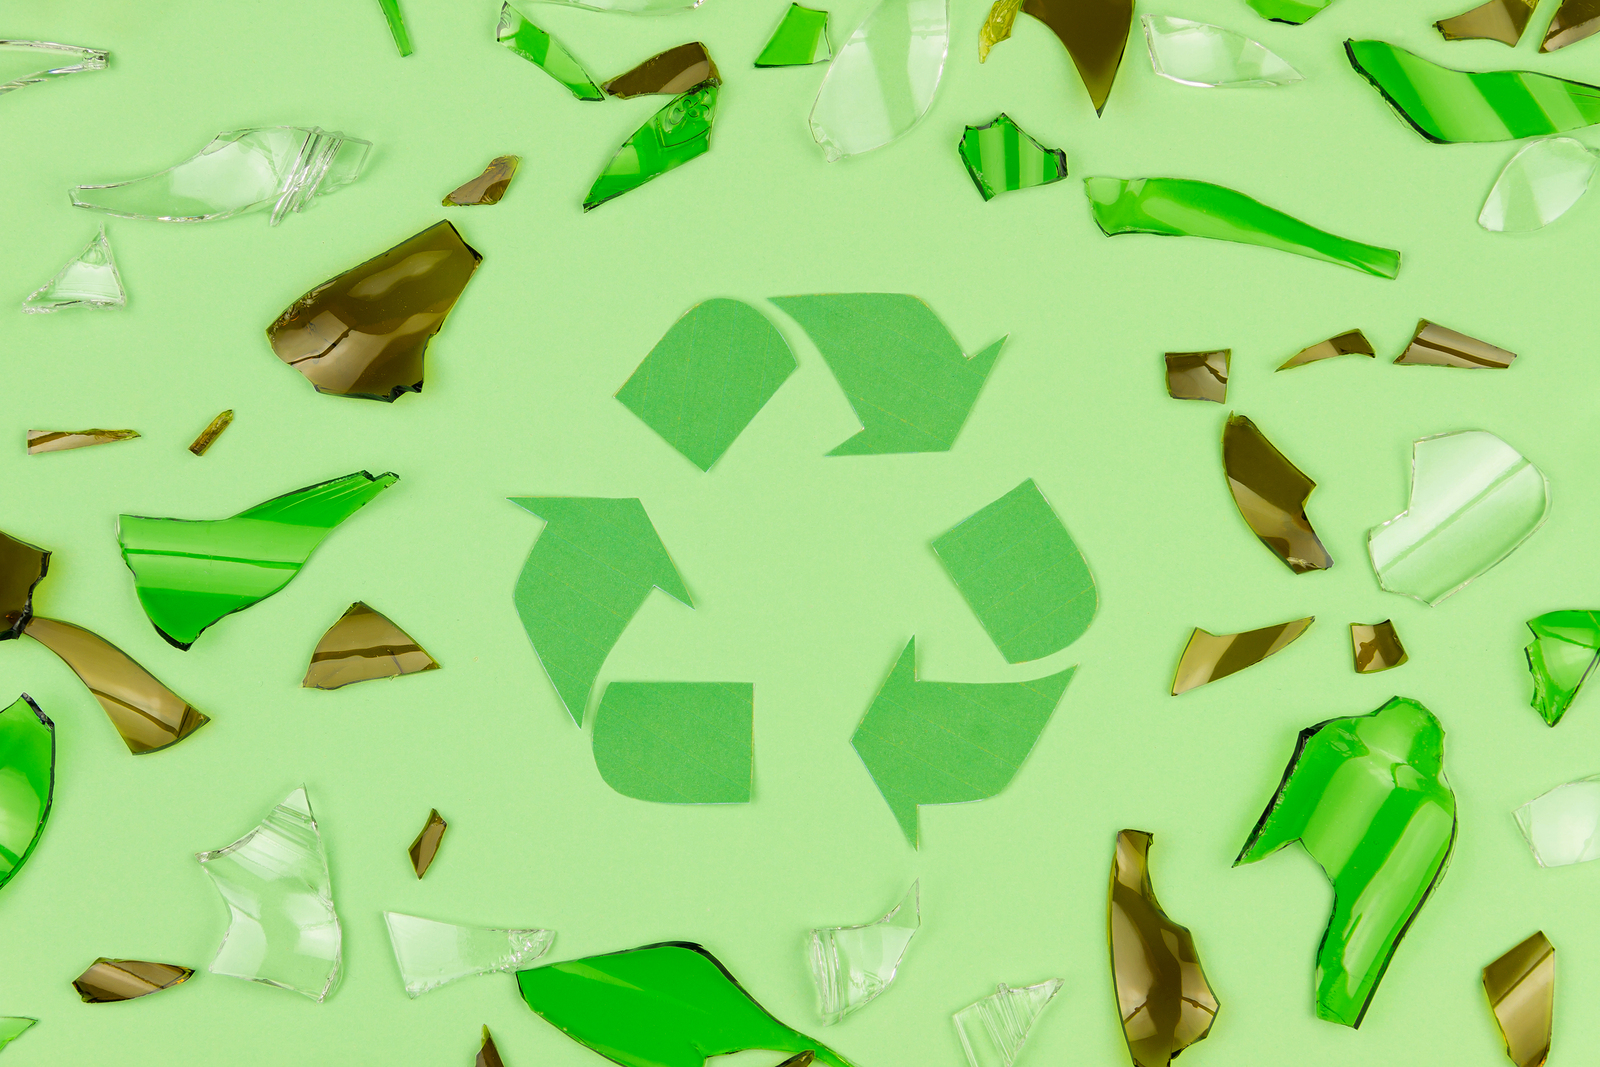 recycling makes sense